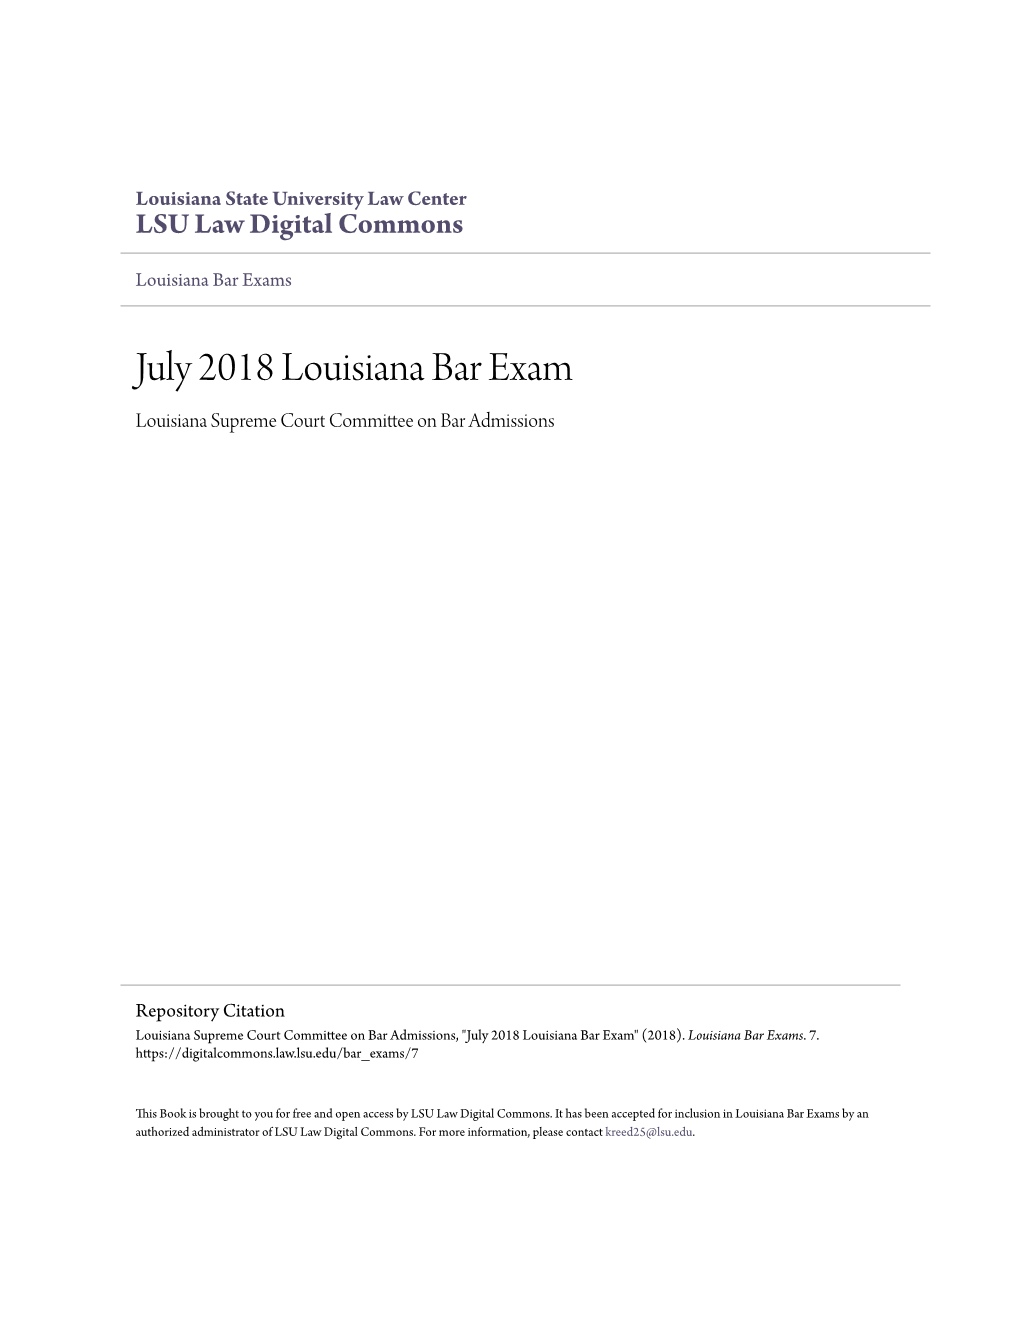 July 2018 Louisiana Bar Exam Louisiana Supreme Court Committee on Bar Admissions